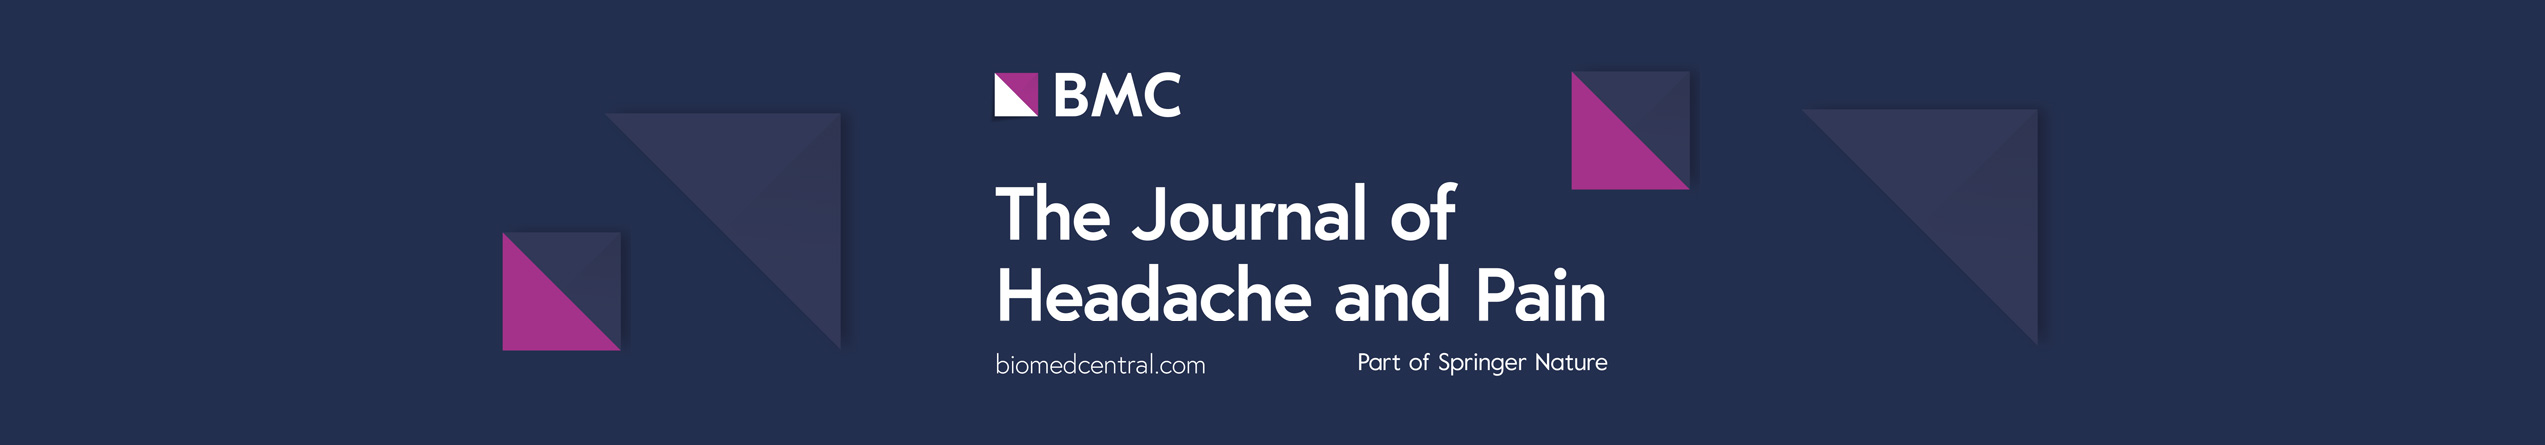 BMC The Journal of Headache and Pain